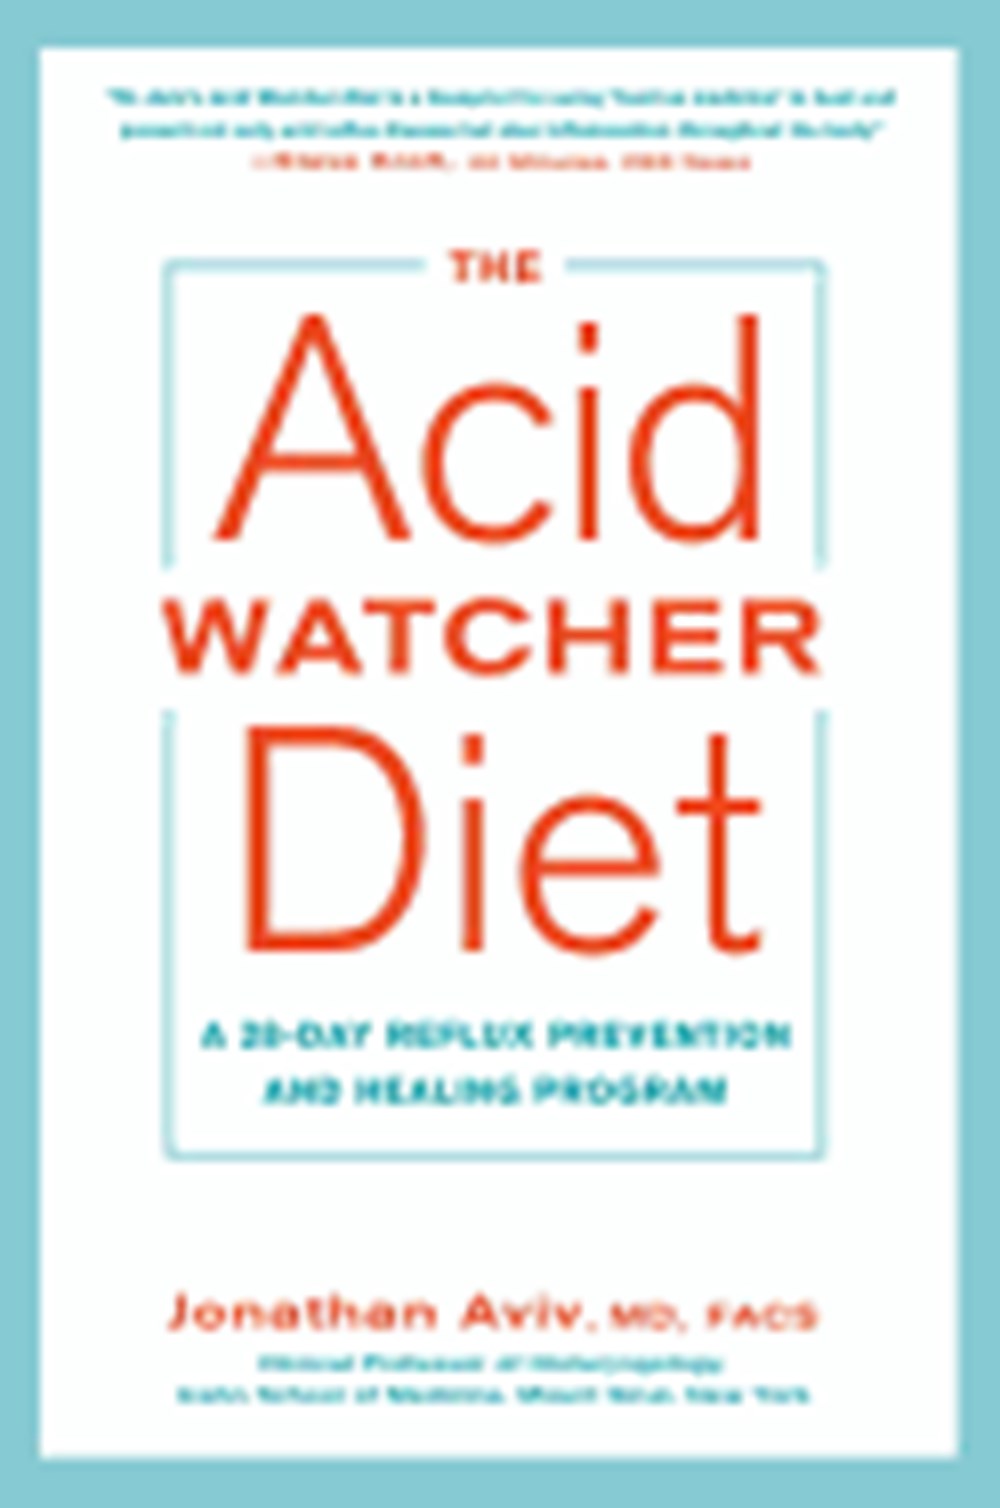 Acid Watcher Diet: A 28-Day Reflux Prevention and Healing Program